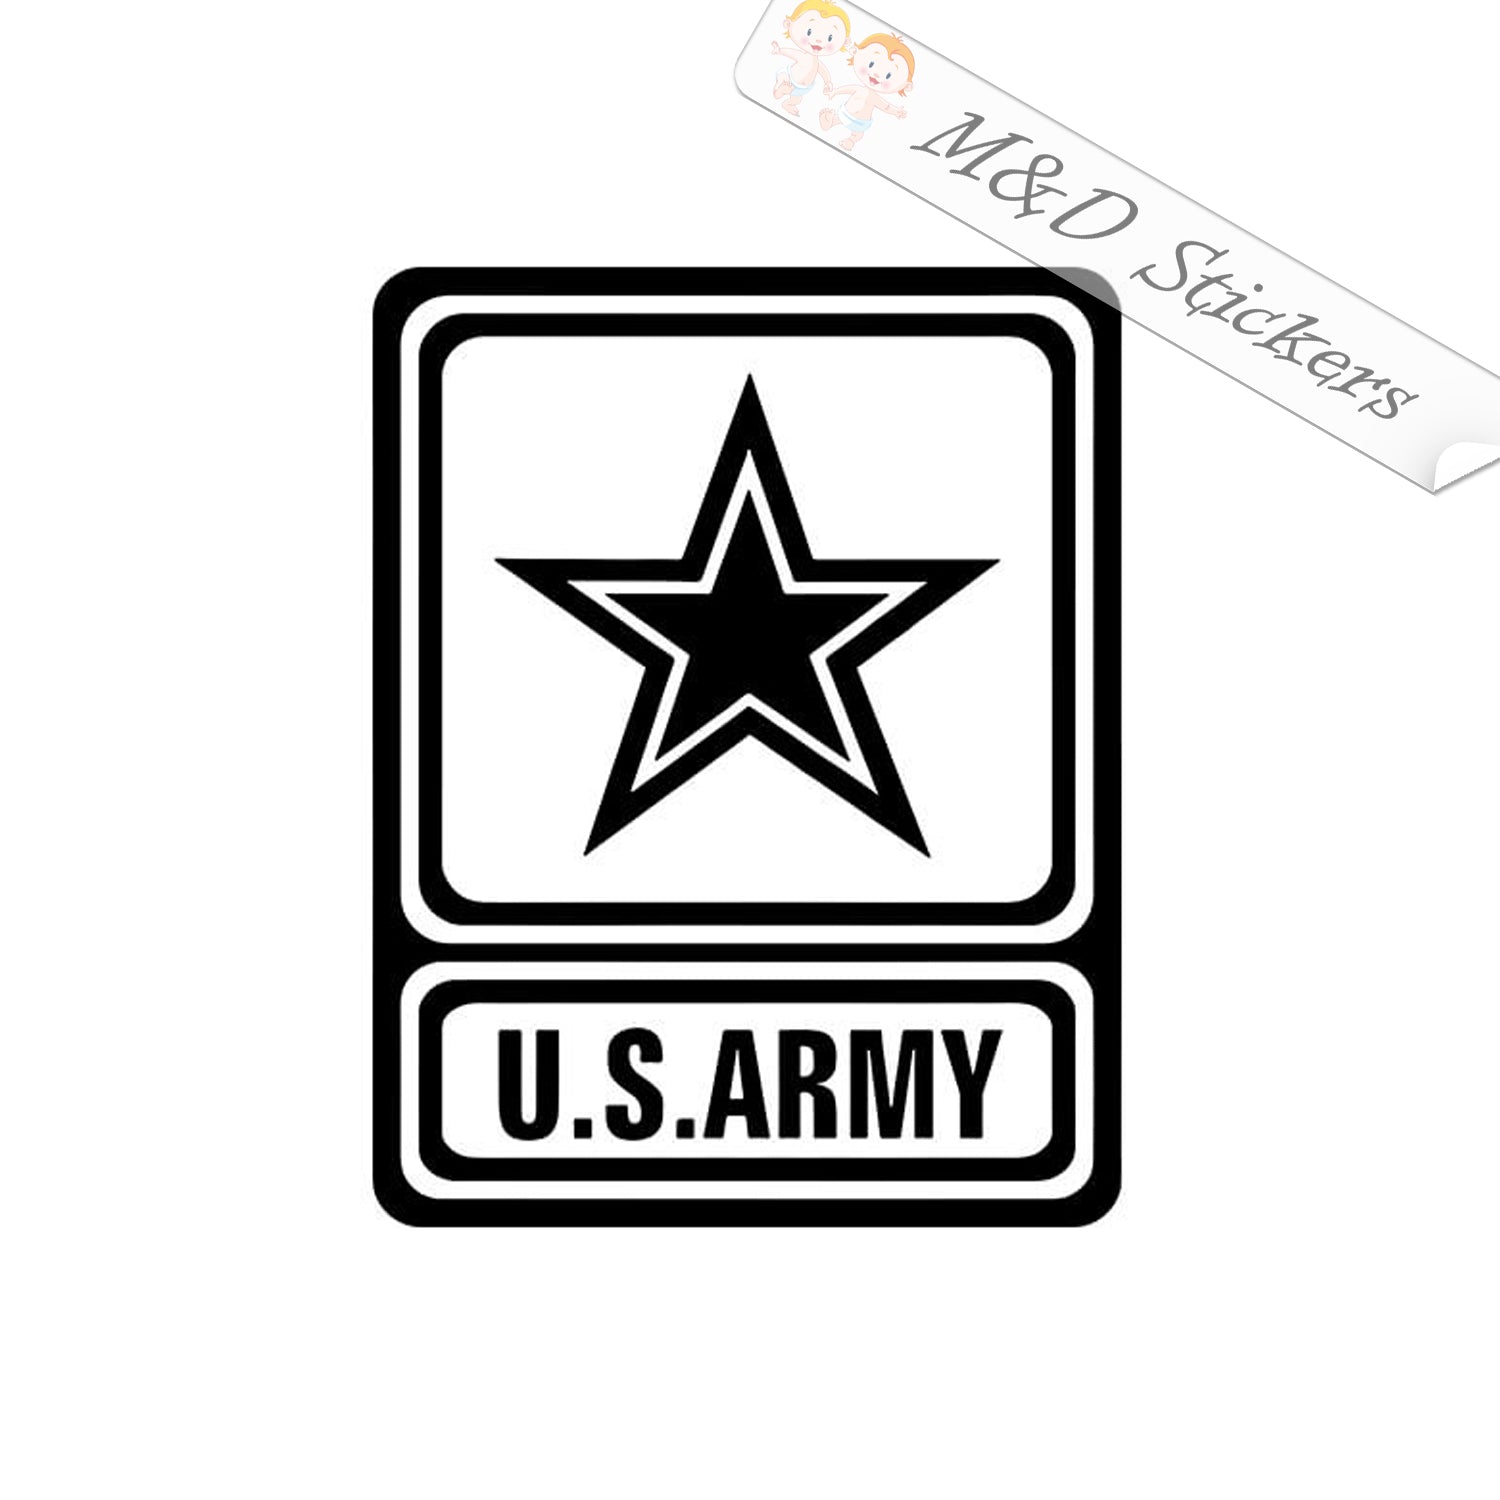  Army Military Font X Initial - Vinyl Decal Sticker - 3.3 x  3.75 - Black